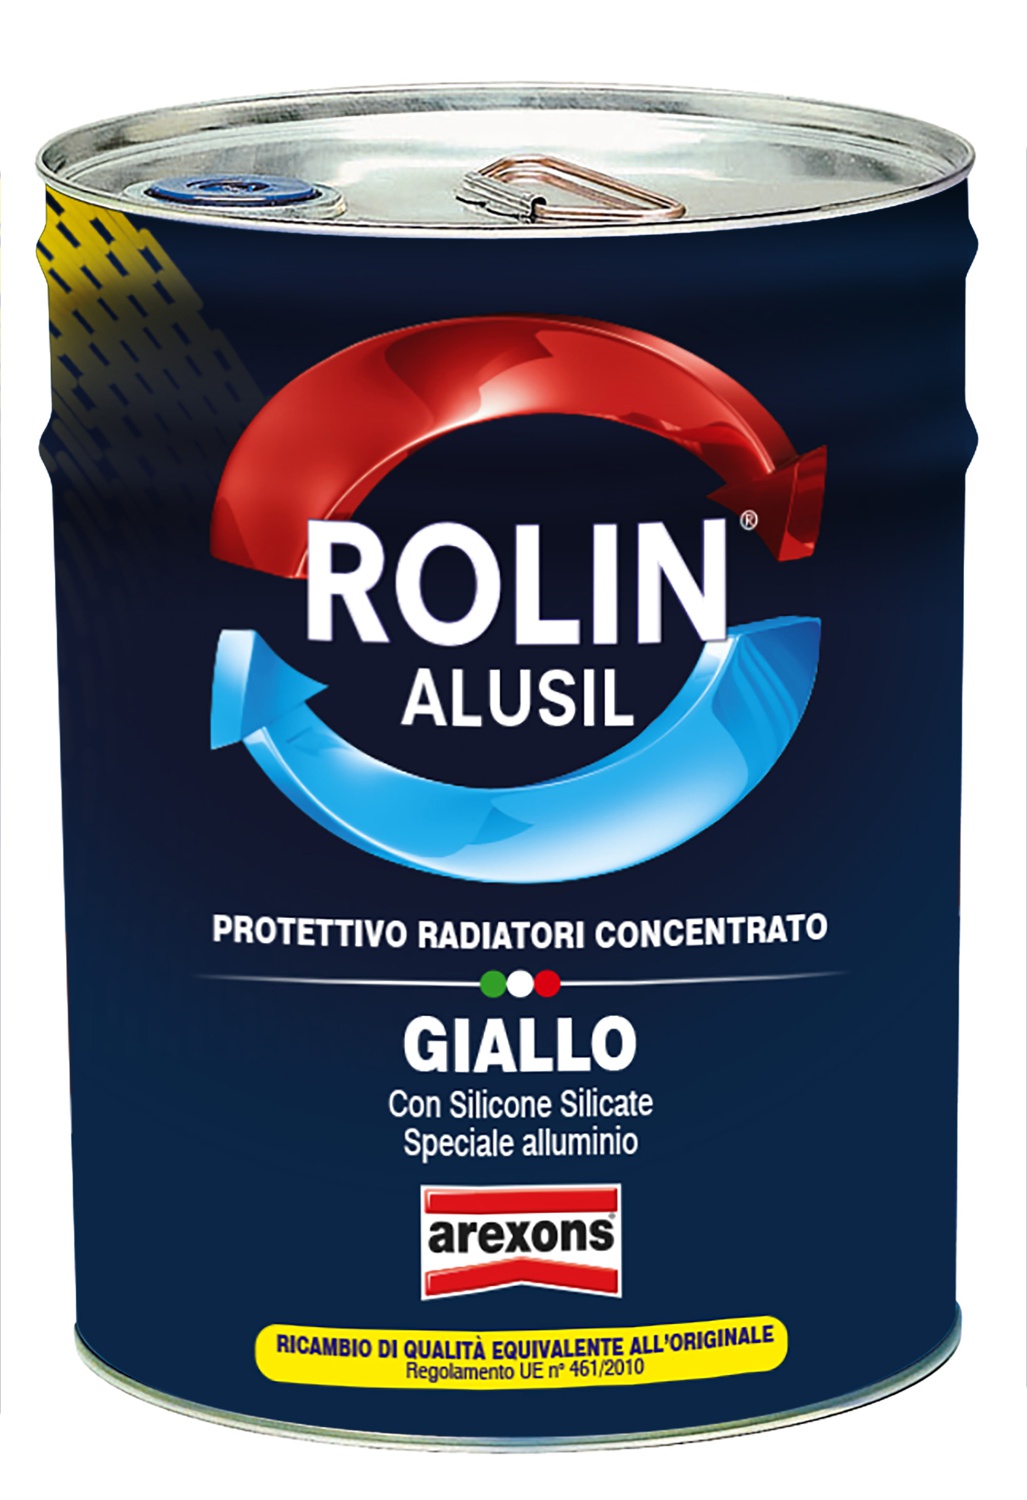 Rolin Alusil Giallo - Arexons